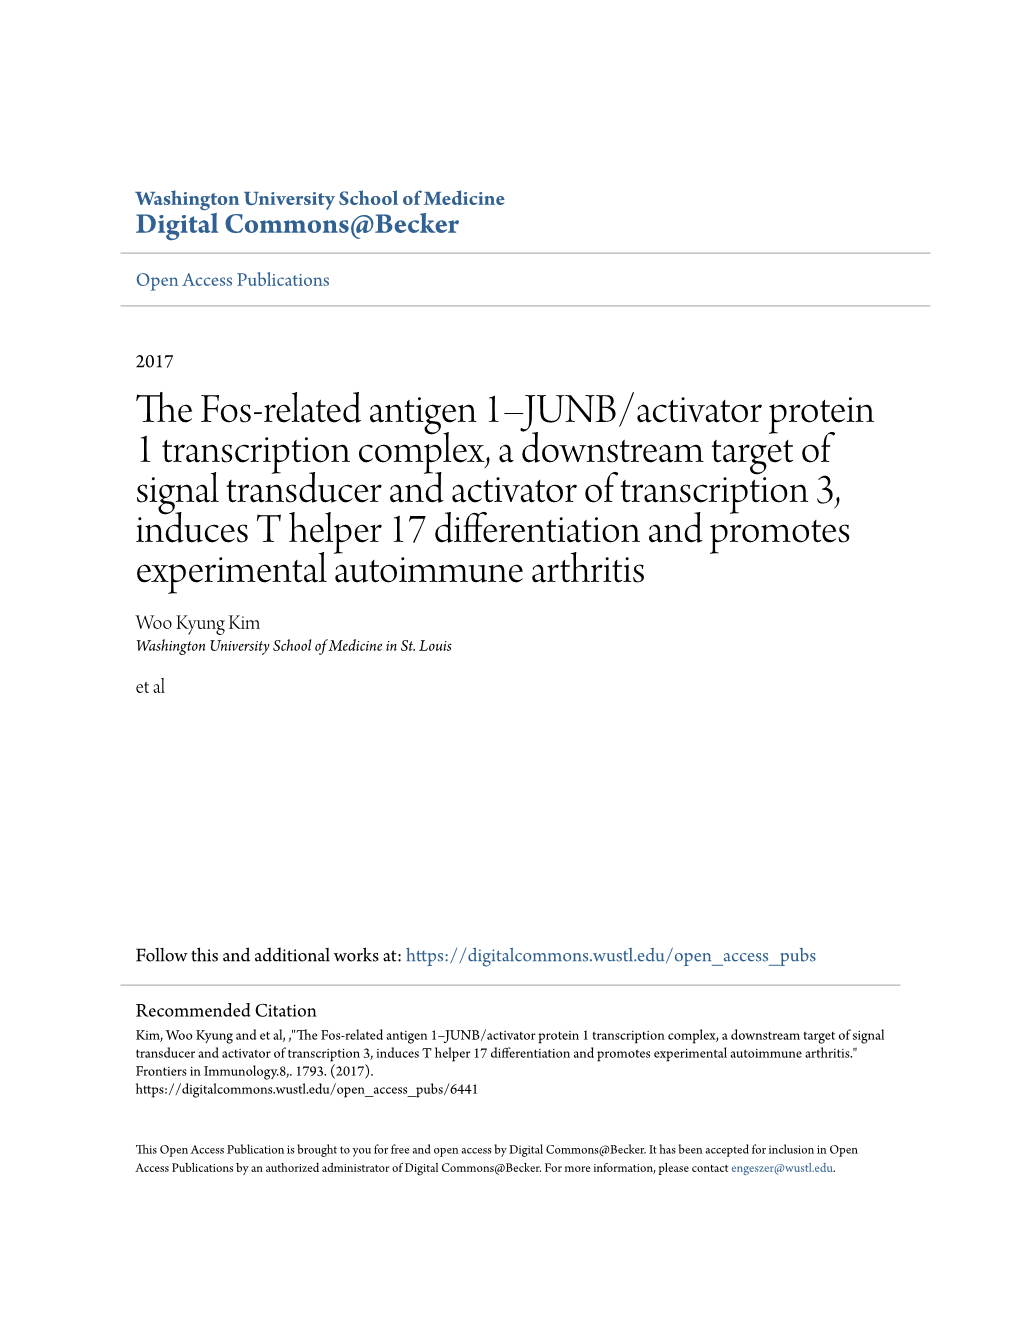 The Fos-Related Antigen 1–JUNB/Activator Protein 1